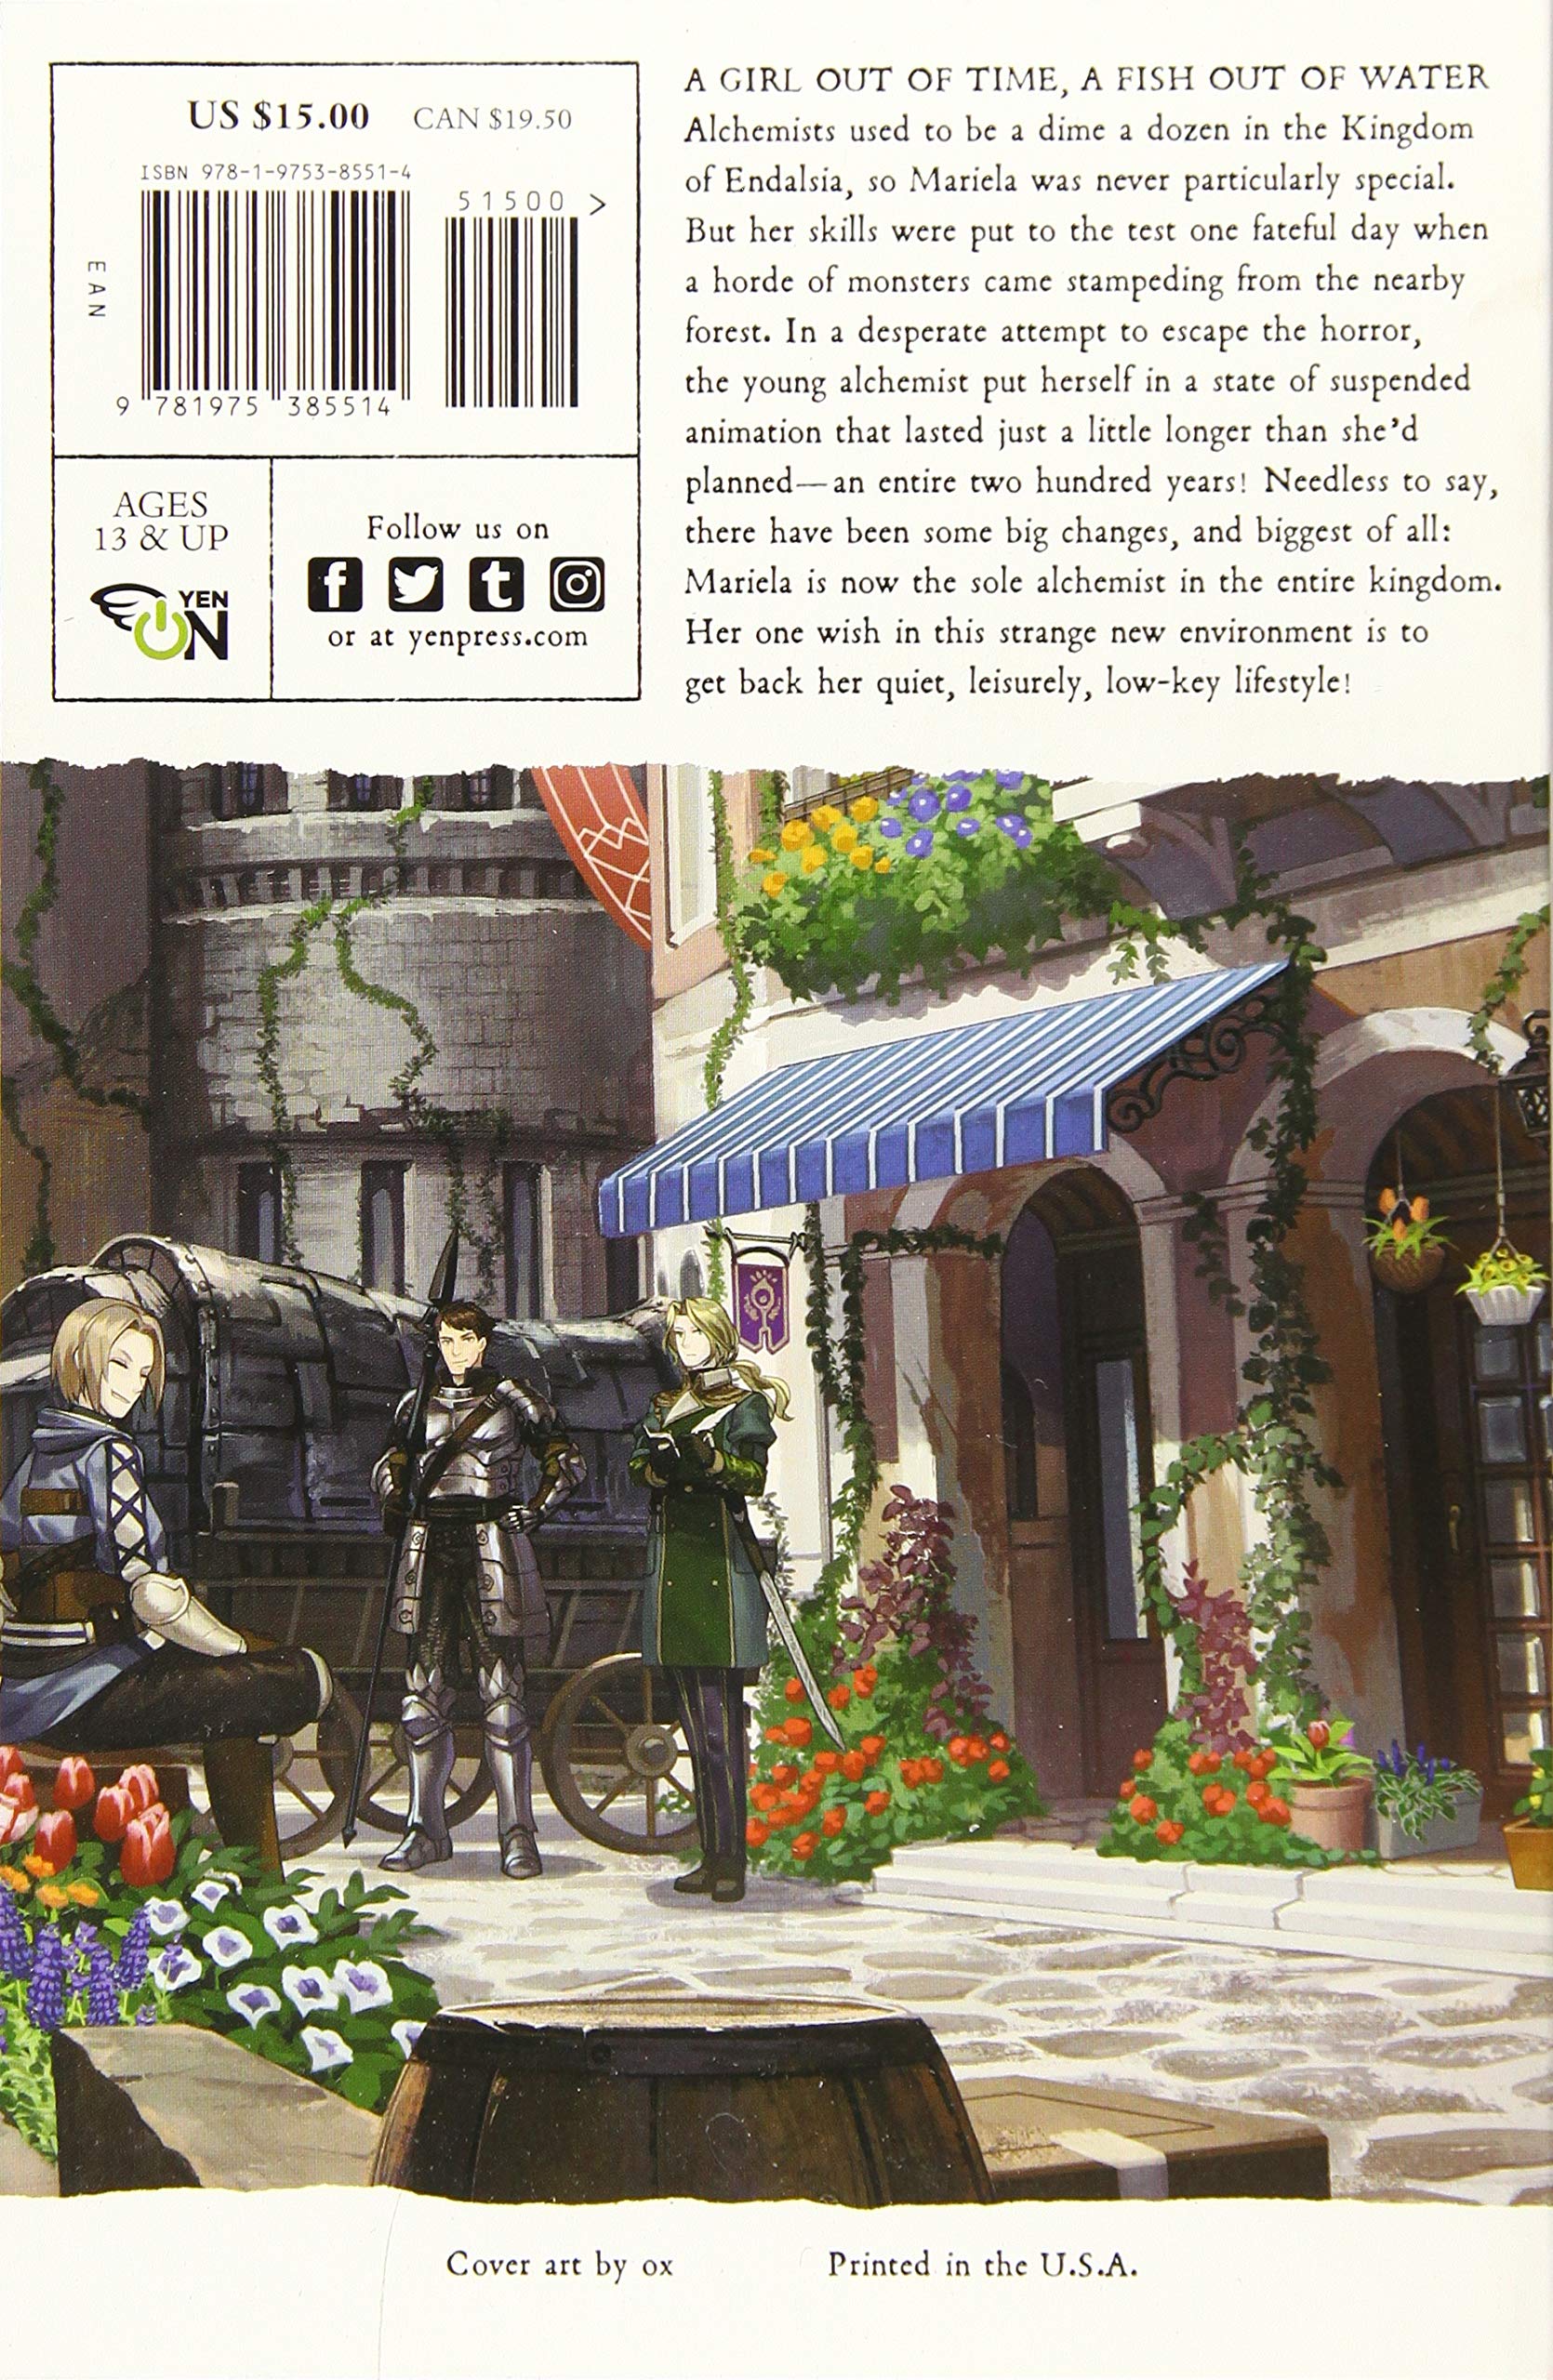 The Alchemist Who Survived Now Dreams of a Quiet City Life - Volume 1 (Light Novel) | Usata Nonohara